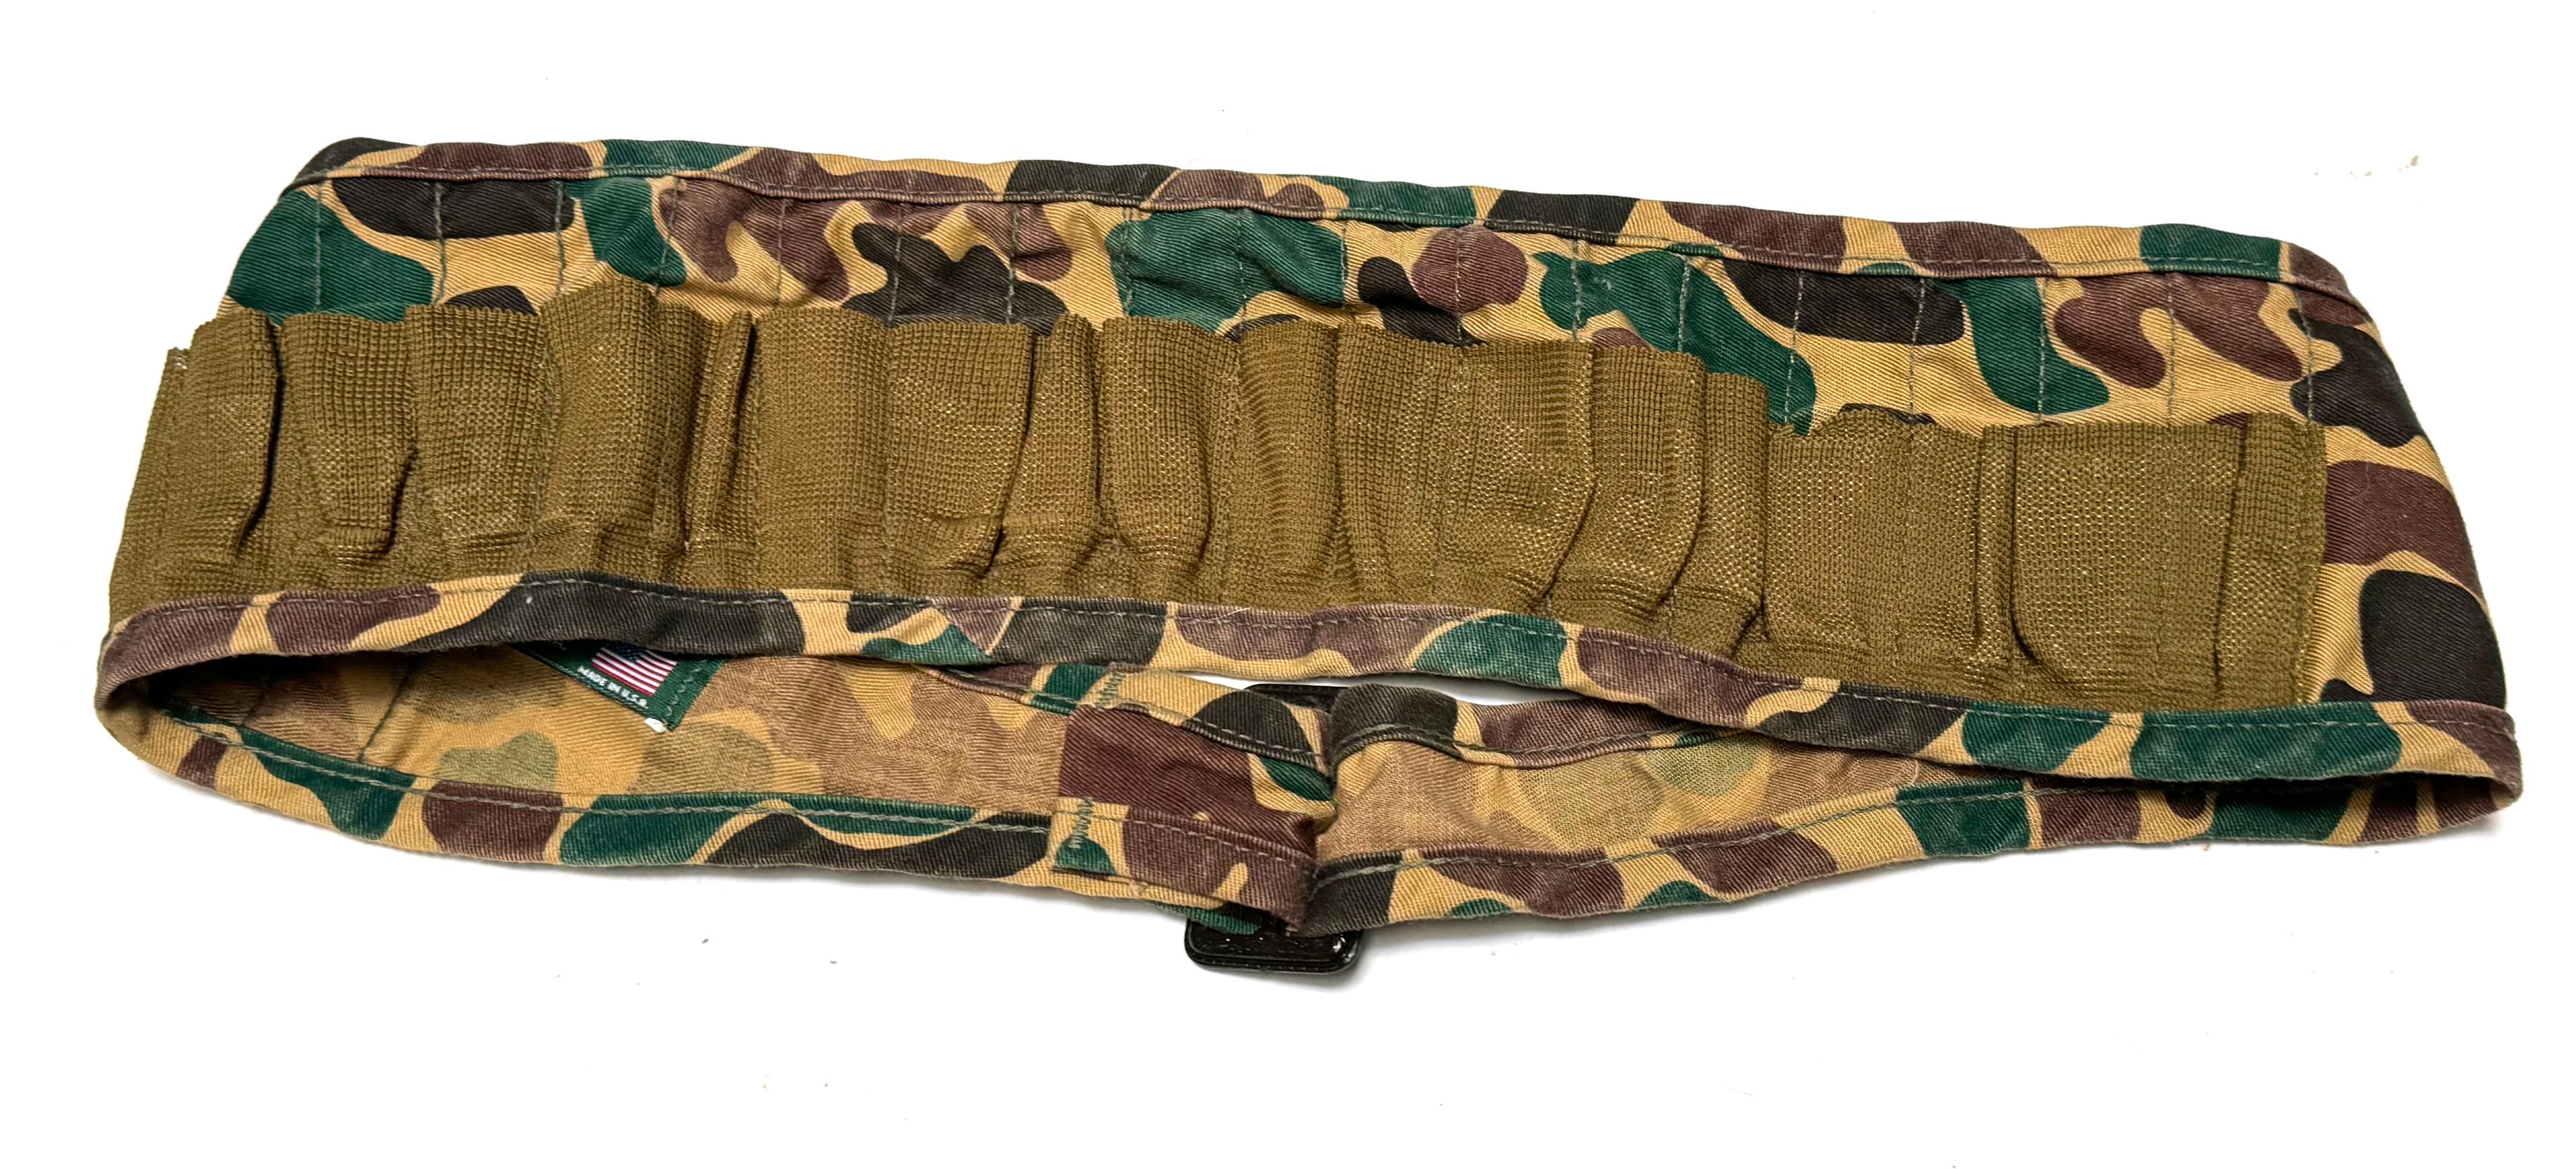 Wilderness Safepacker “Commander” Concealment Holster + Ammo Sleeve & Bandoleer